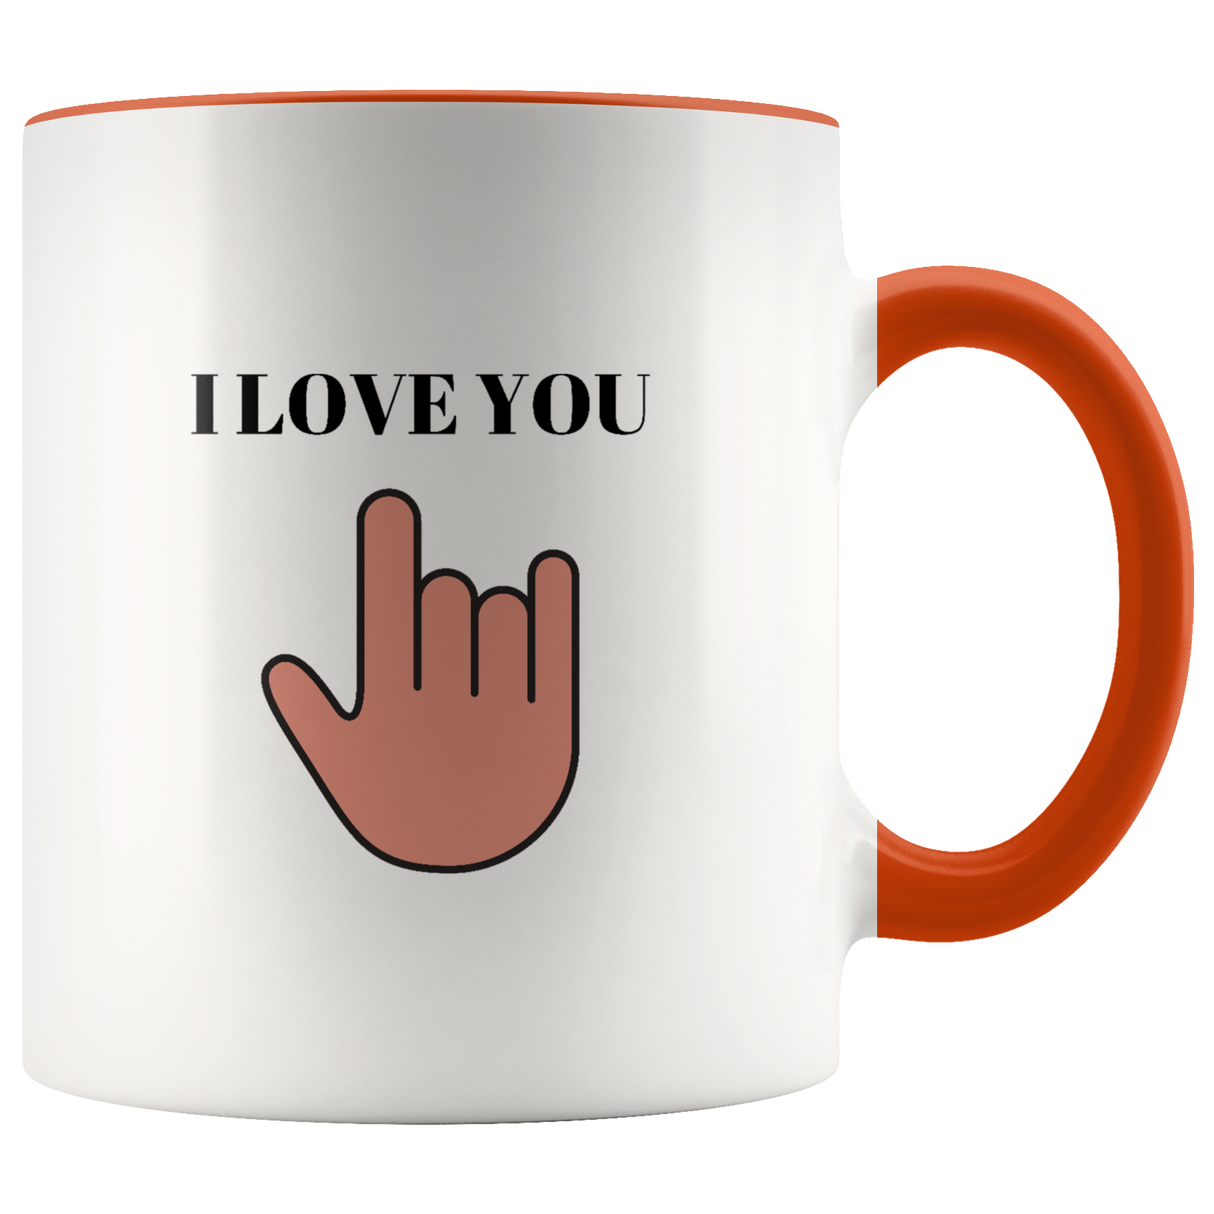 I Love You Mug Ceramic Accent Mug - Orange | Shop Sassy Chick